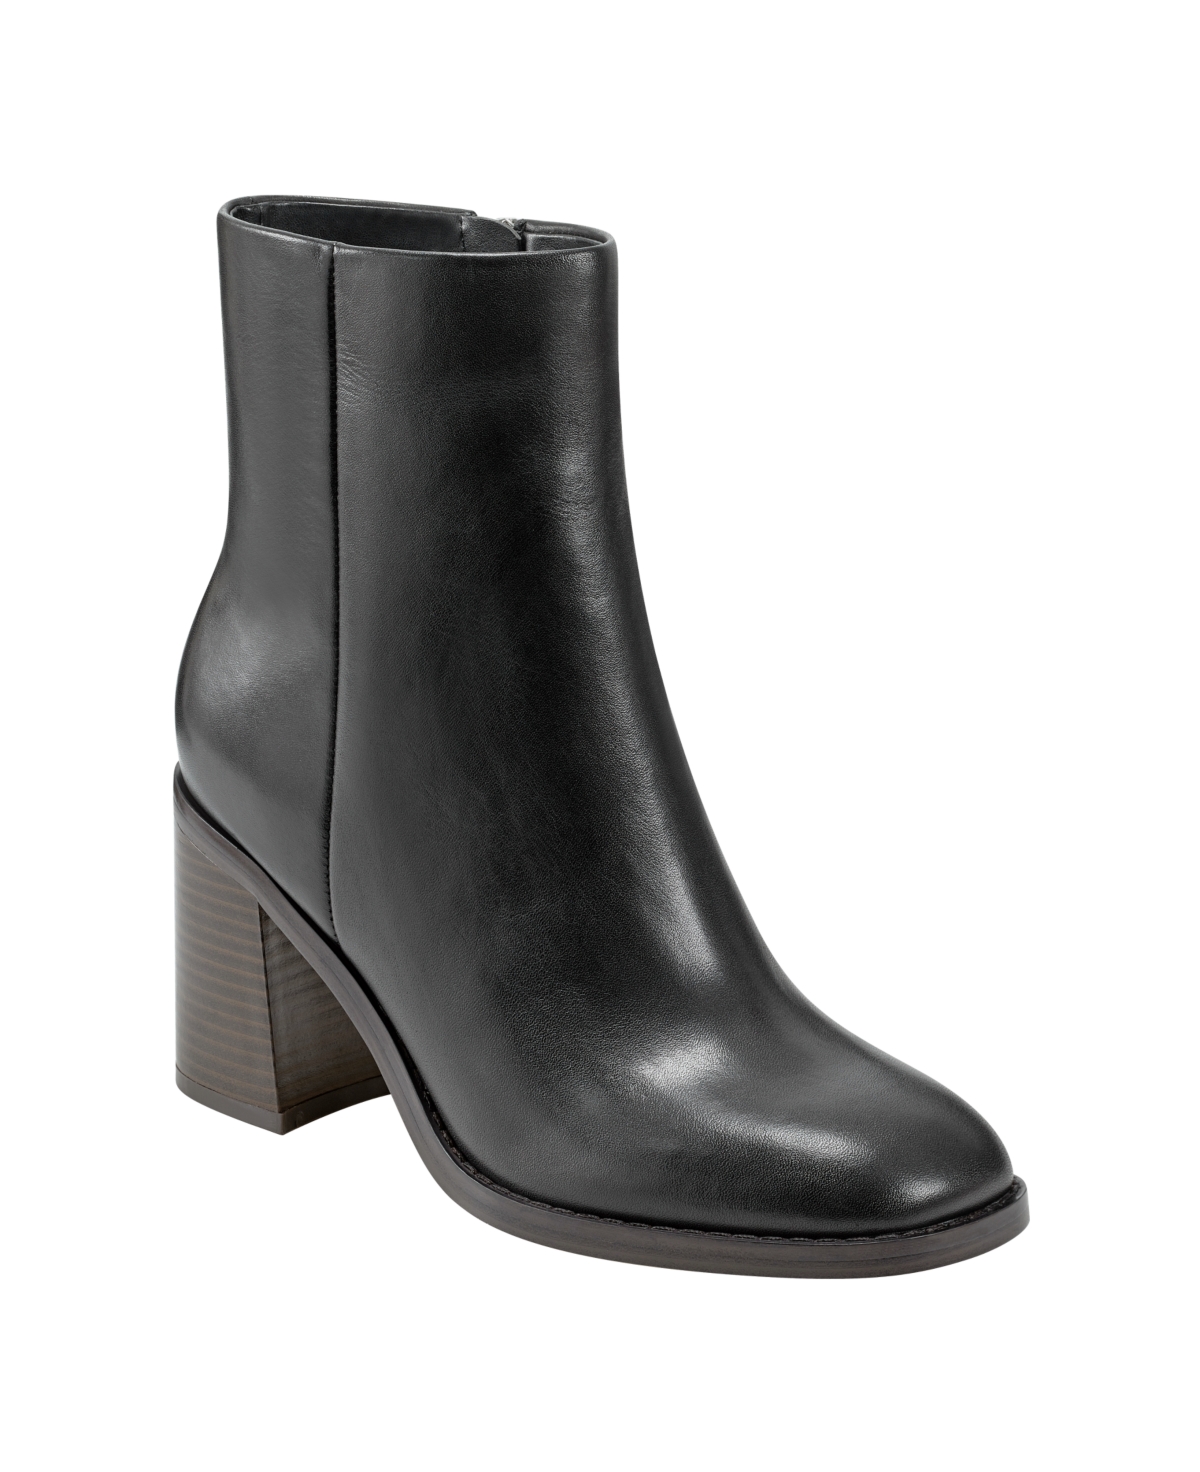 Women's Lianna Square Toe Block Heel Dress Booties - Dark Natural Leather